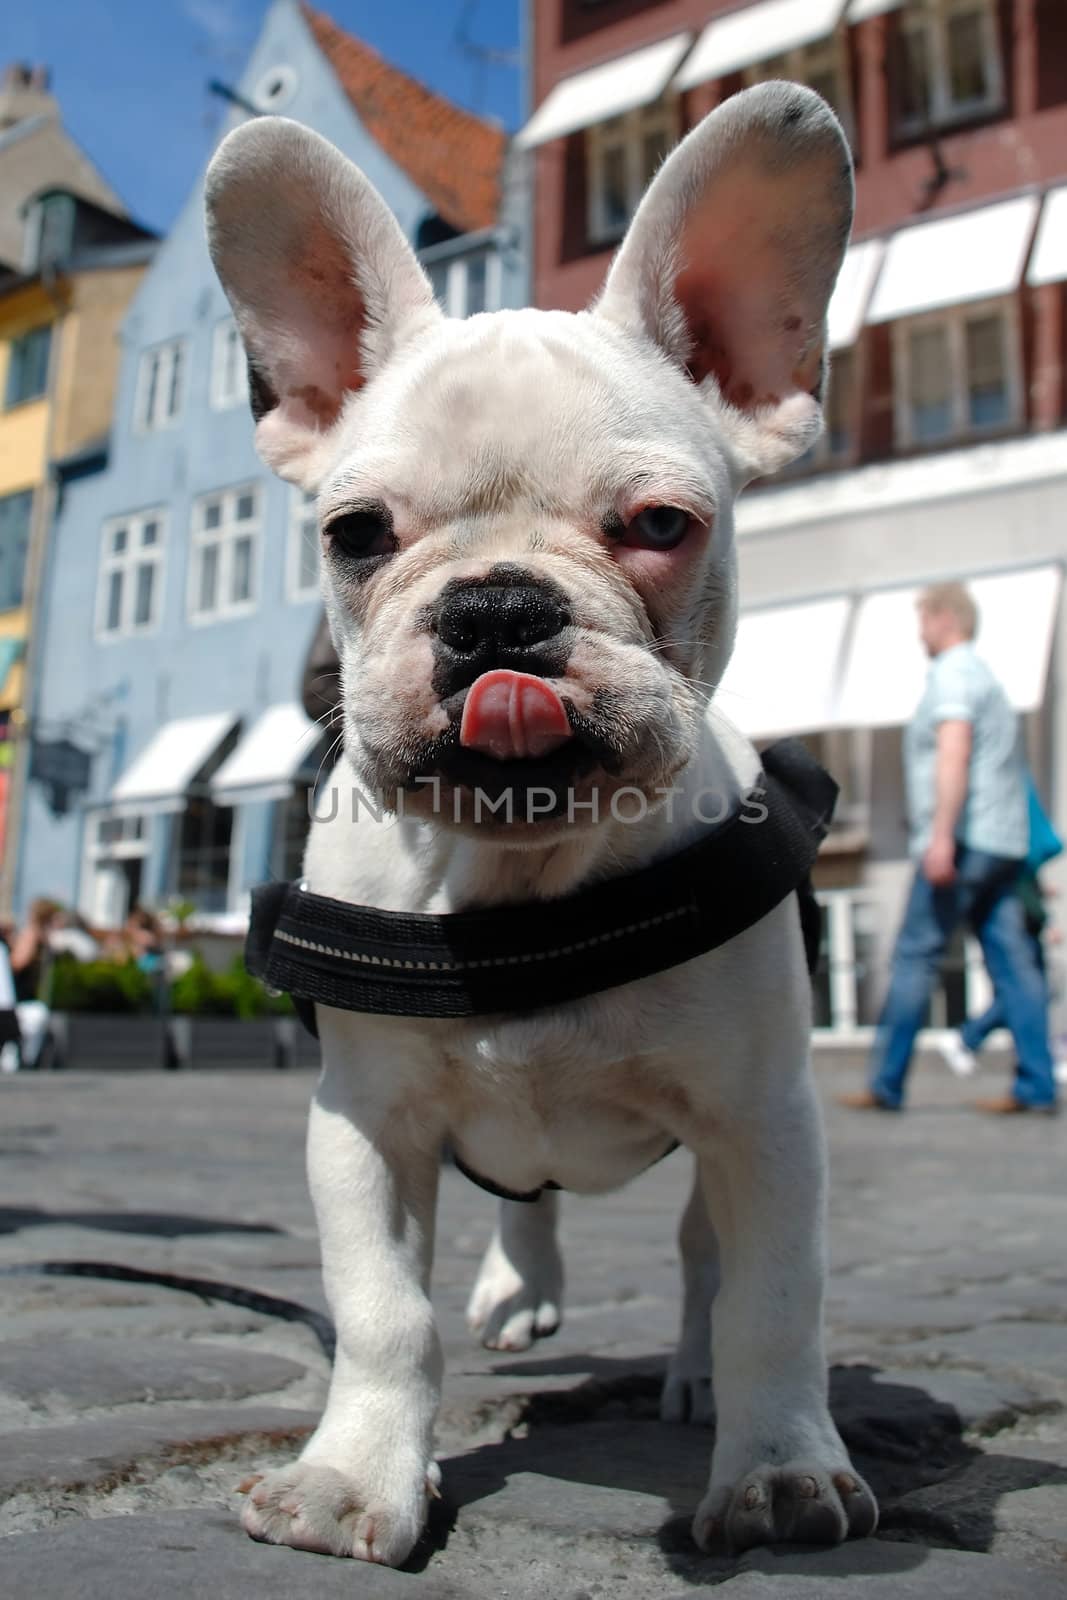 French bulldog by cfoto